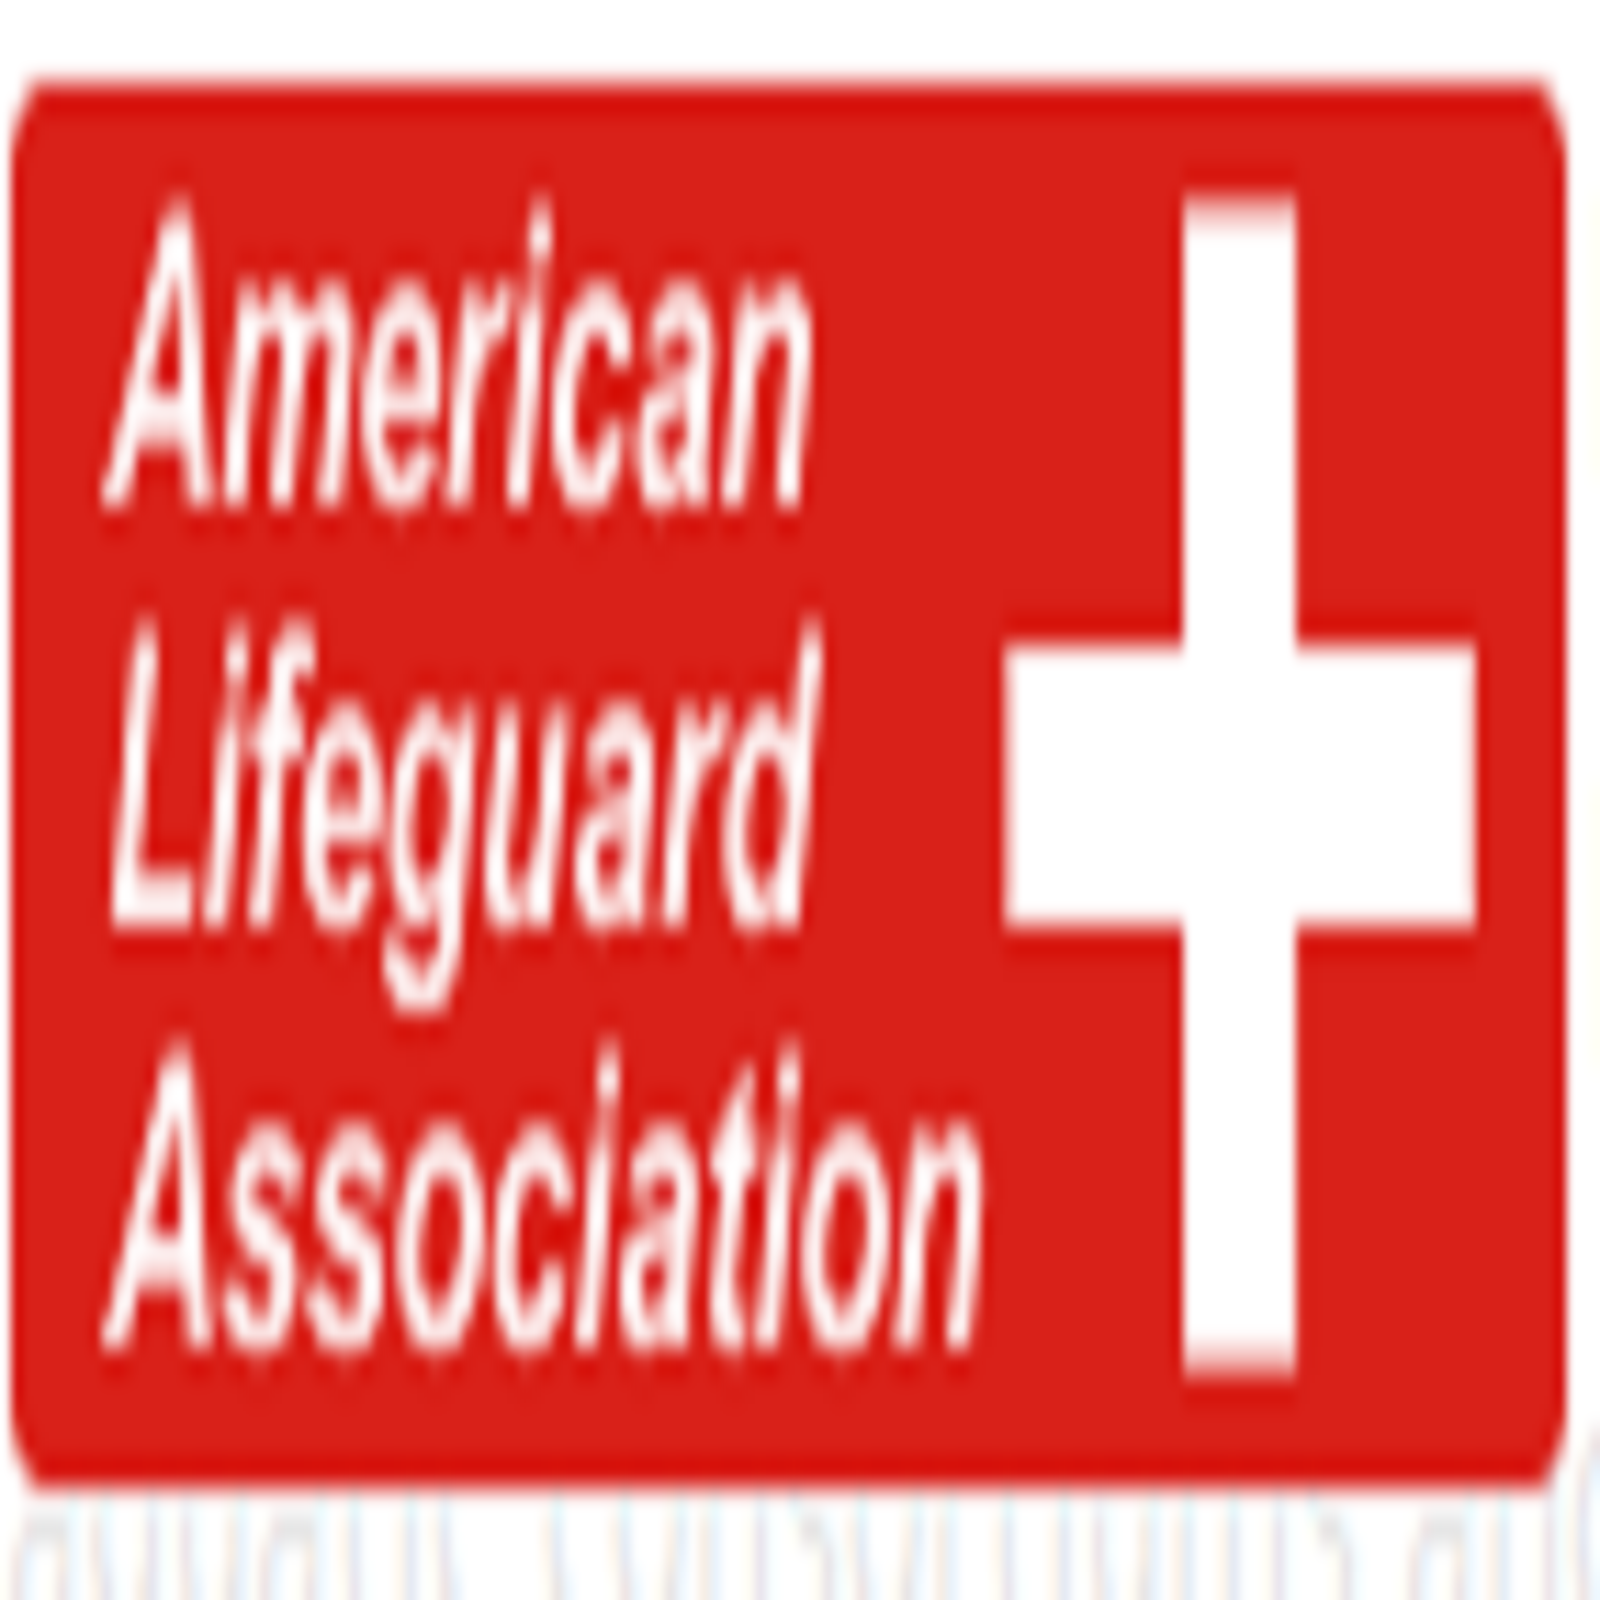 American Lifeguard Association Vienna's Logo